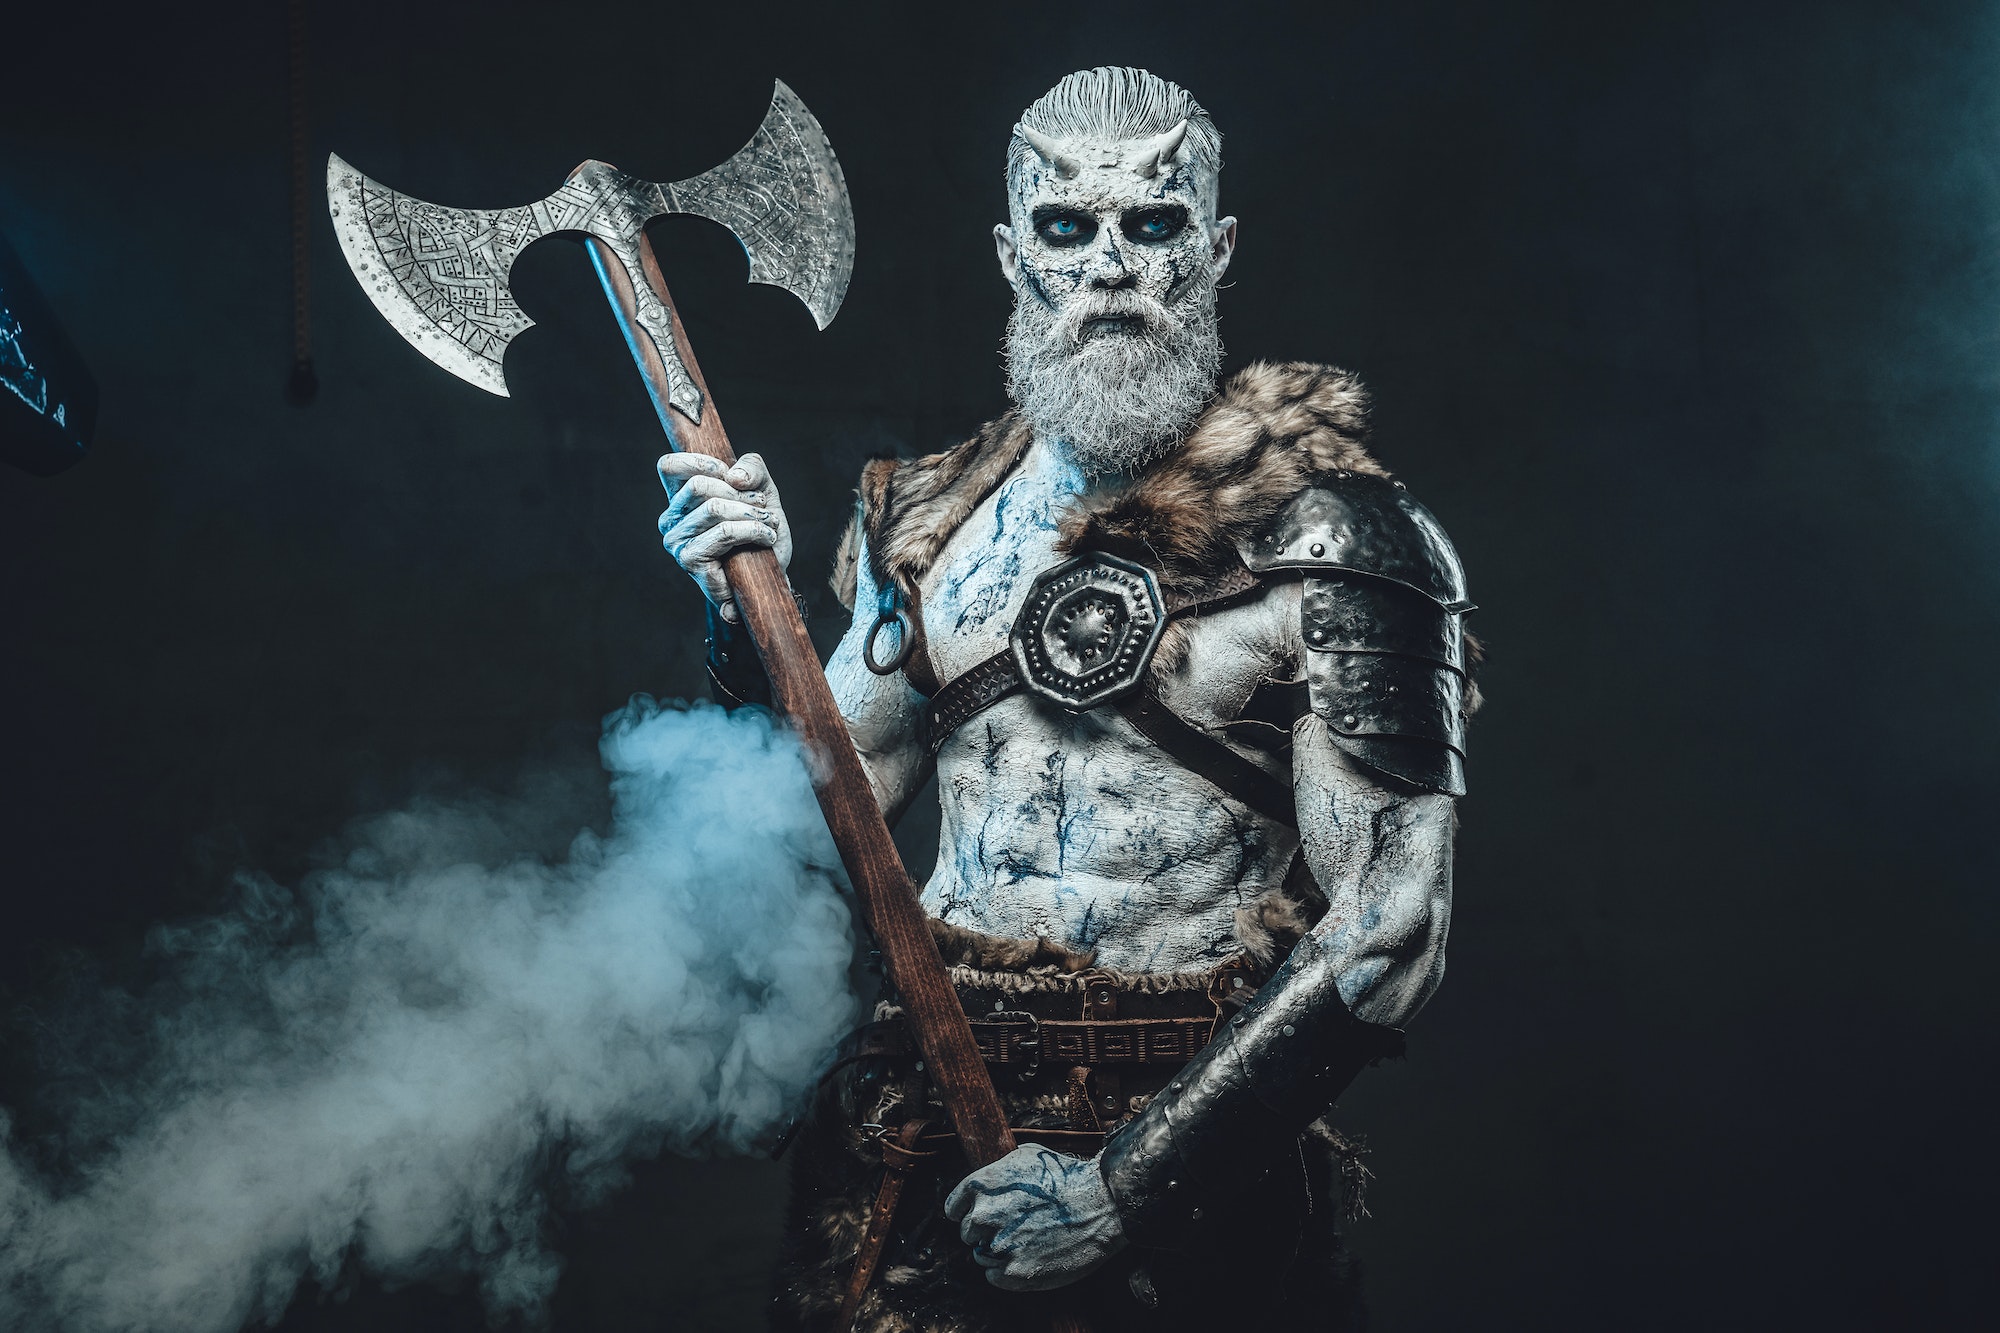 Savage dead warrior with huge axe in smokey dark background